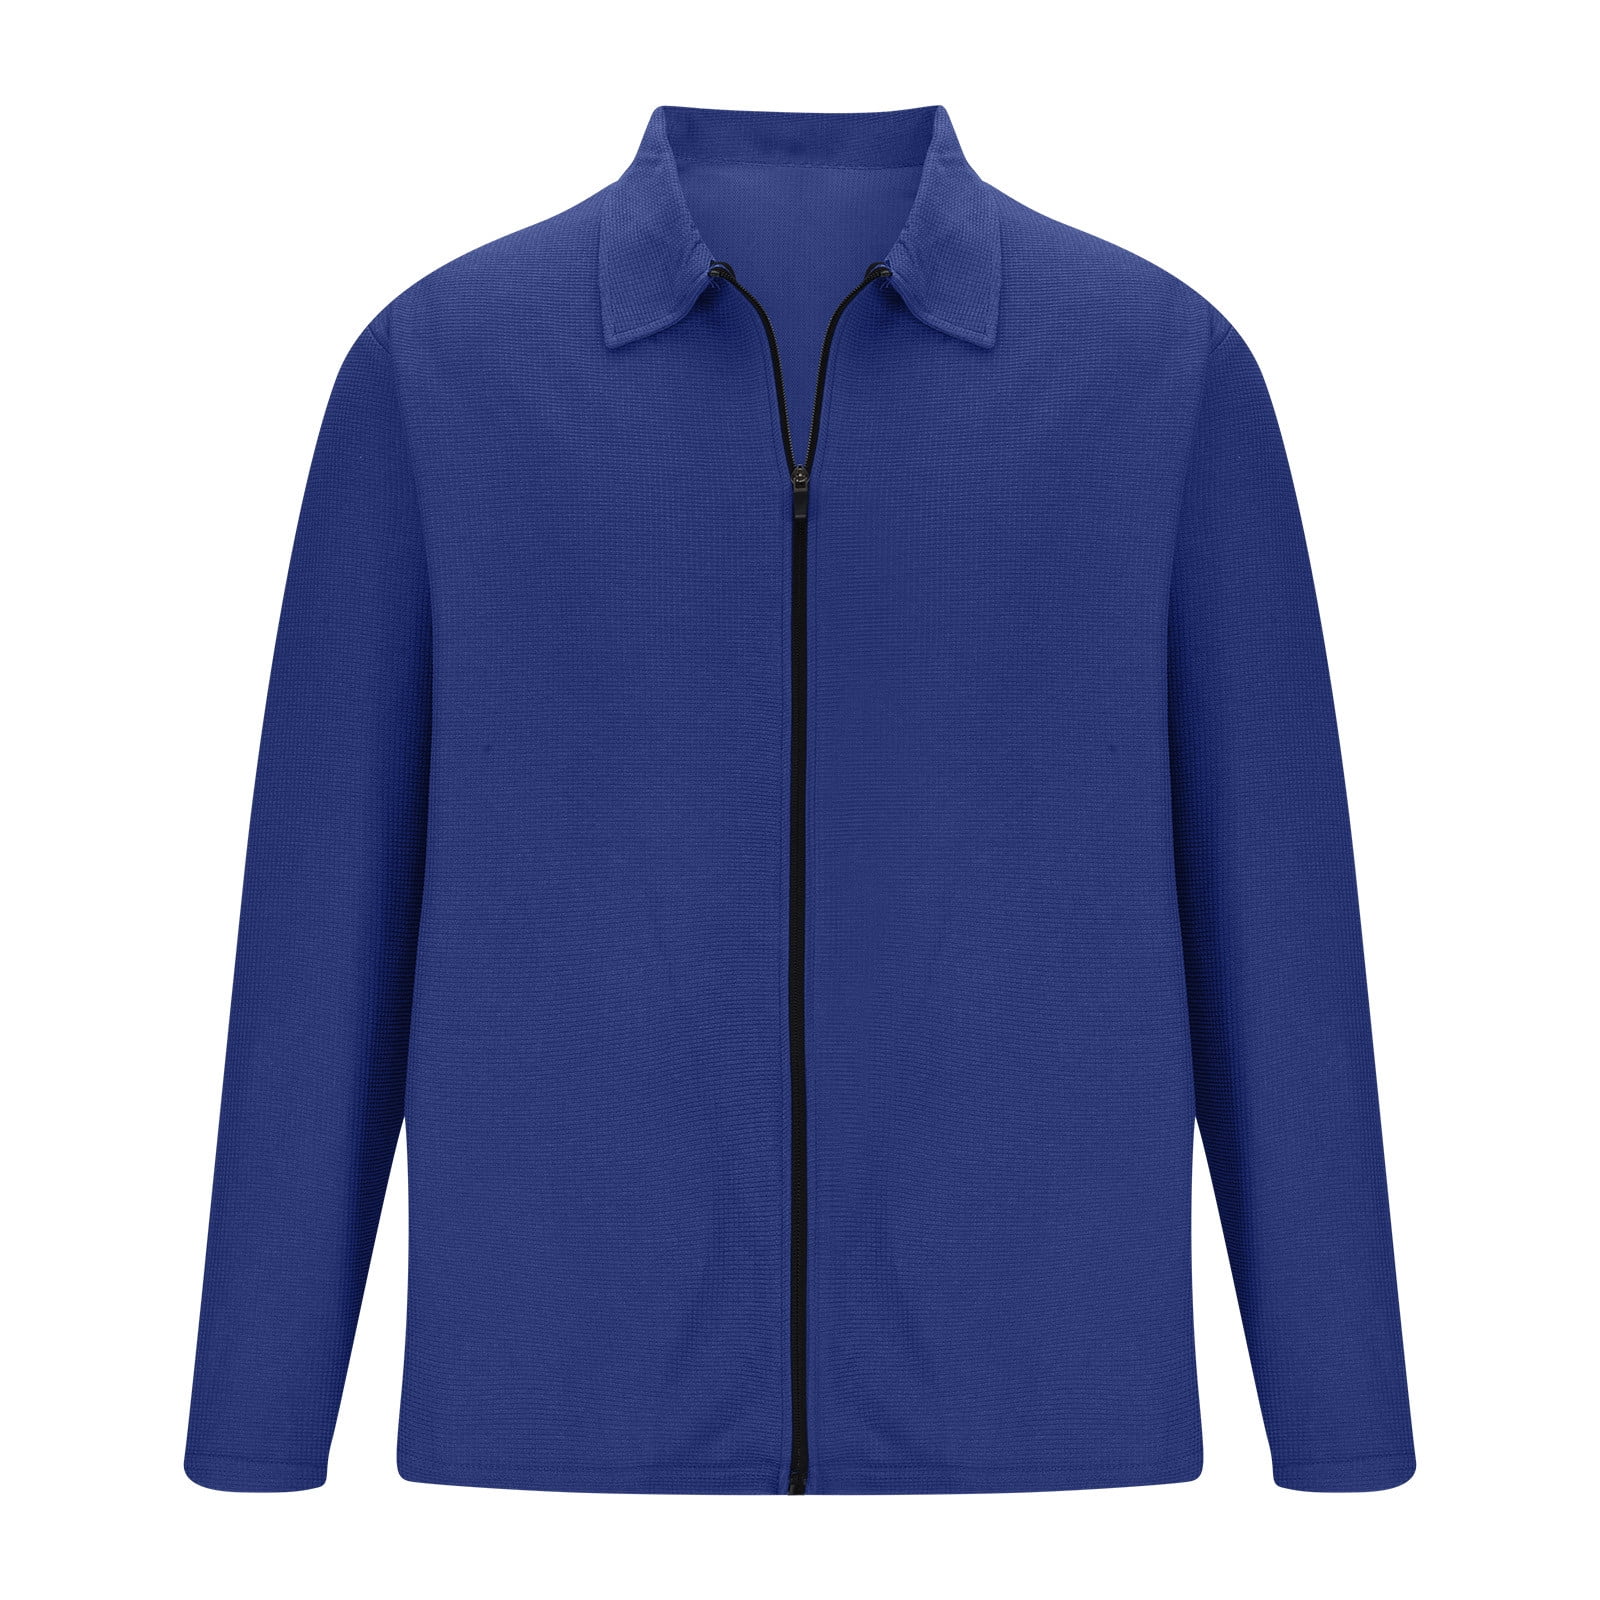 Elainilye Fashion Men Fall Winter Tops Zip Mock Neck Cardigan Casual Jacket  Long Sleeve Shirt Sport Coat